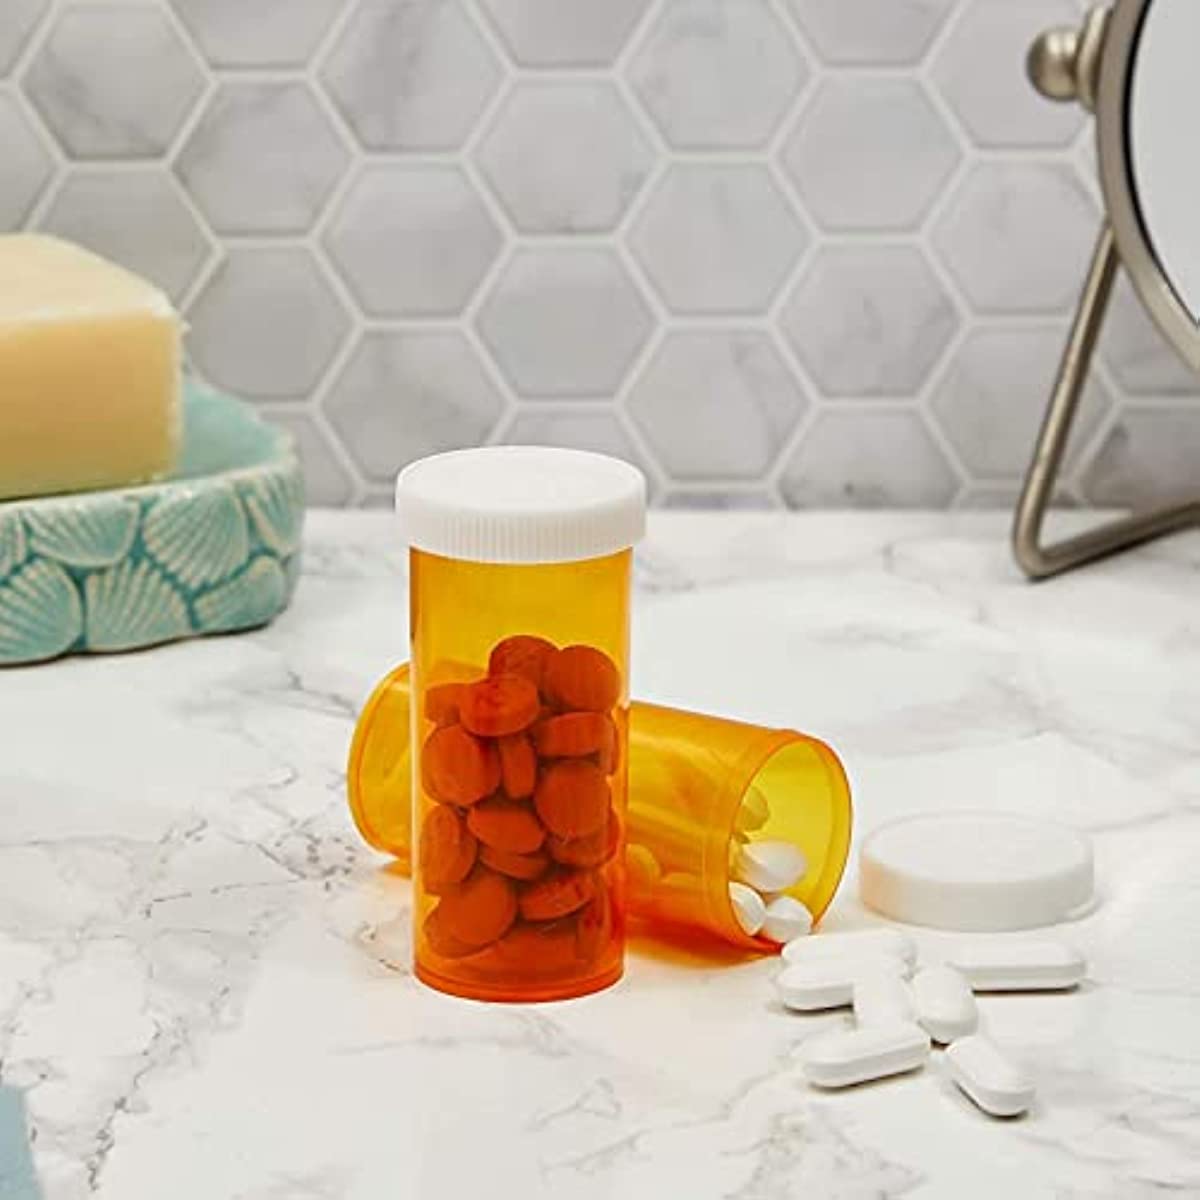 50 Pack Empty Pill Bottles with Caps for Prescription Medication, 8-Dram Plastic Vials (Orange)